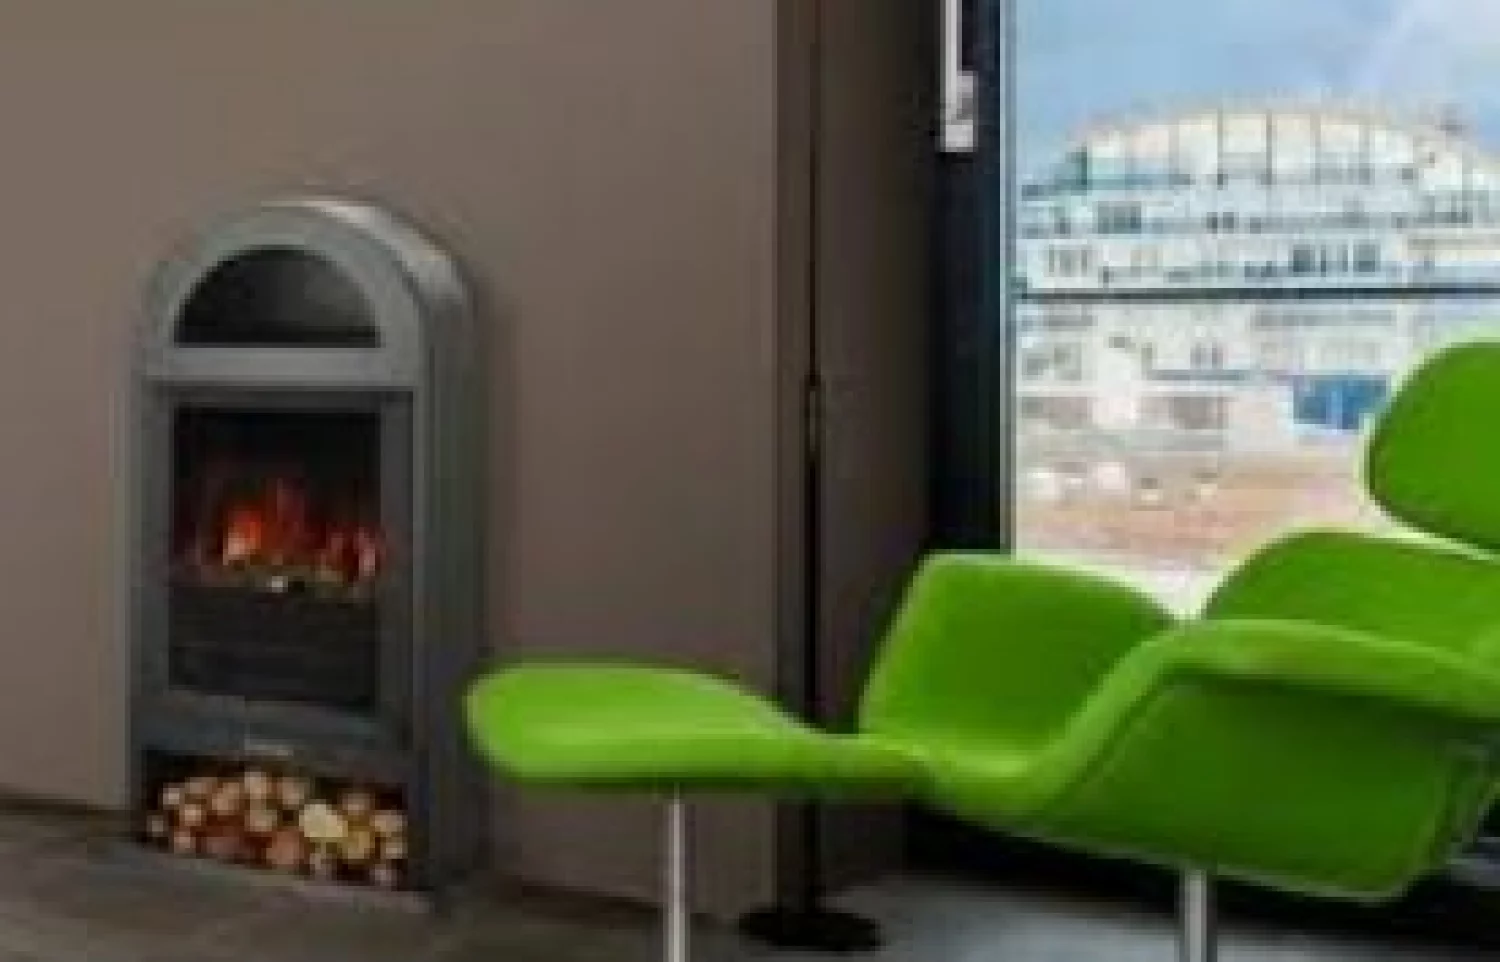 363265 Eurom Barcelona Fireplace - Cheminée décorative / radiateur